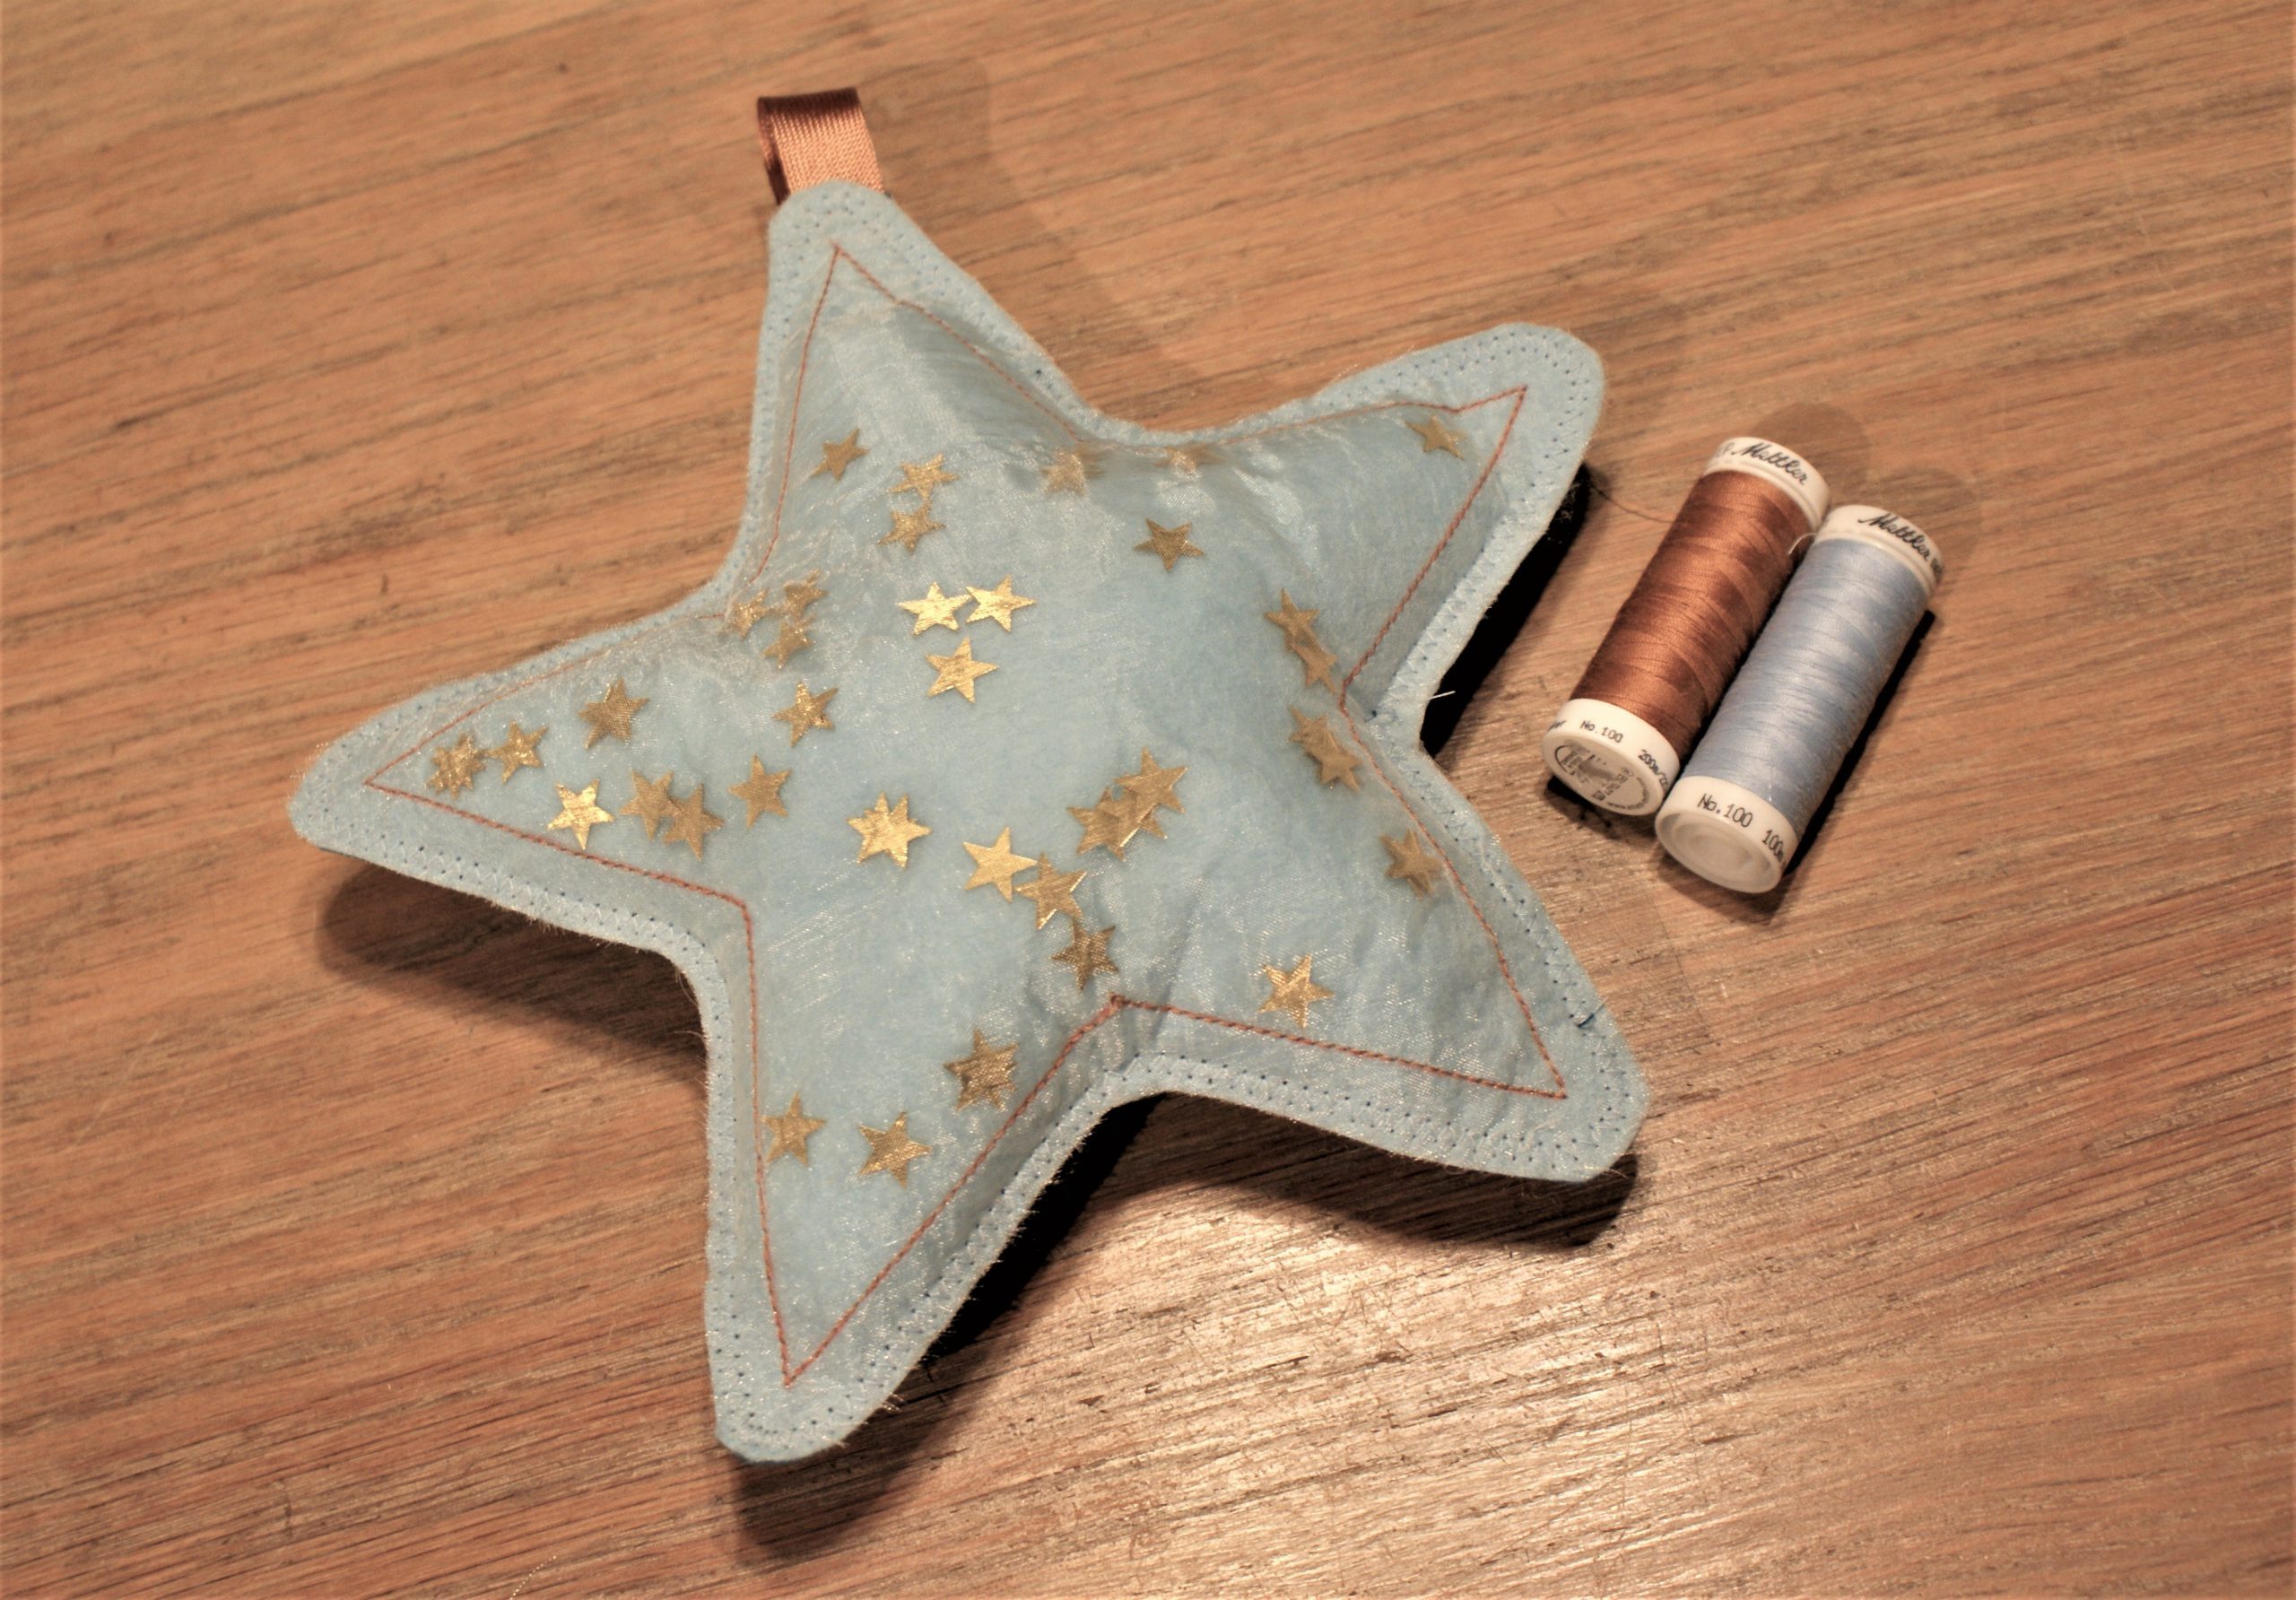 Sew a softie in July: sew a glitter star - beginner sewist project